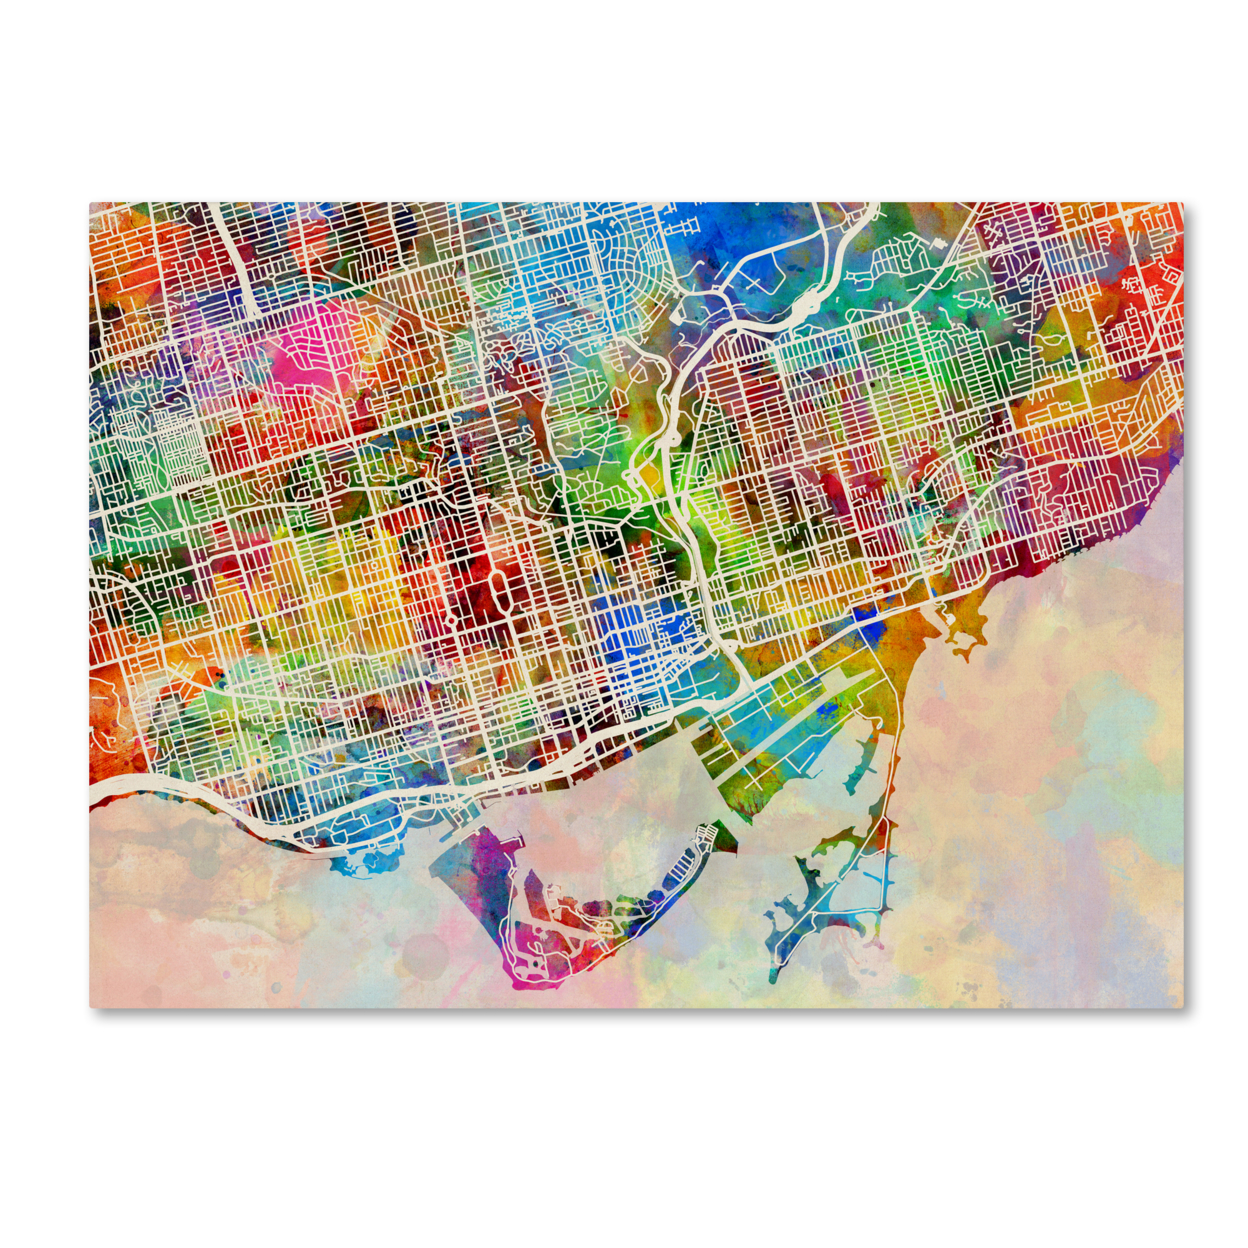 Michael Tompsett 'Toronto Street Map' Canvas Wall Art 35 X 47 Inches